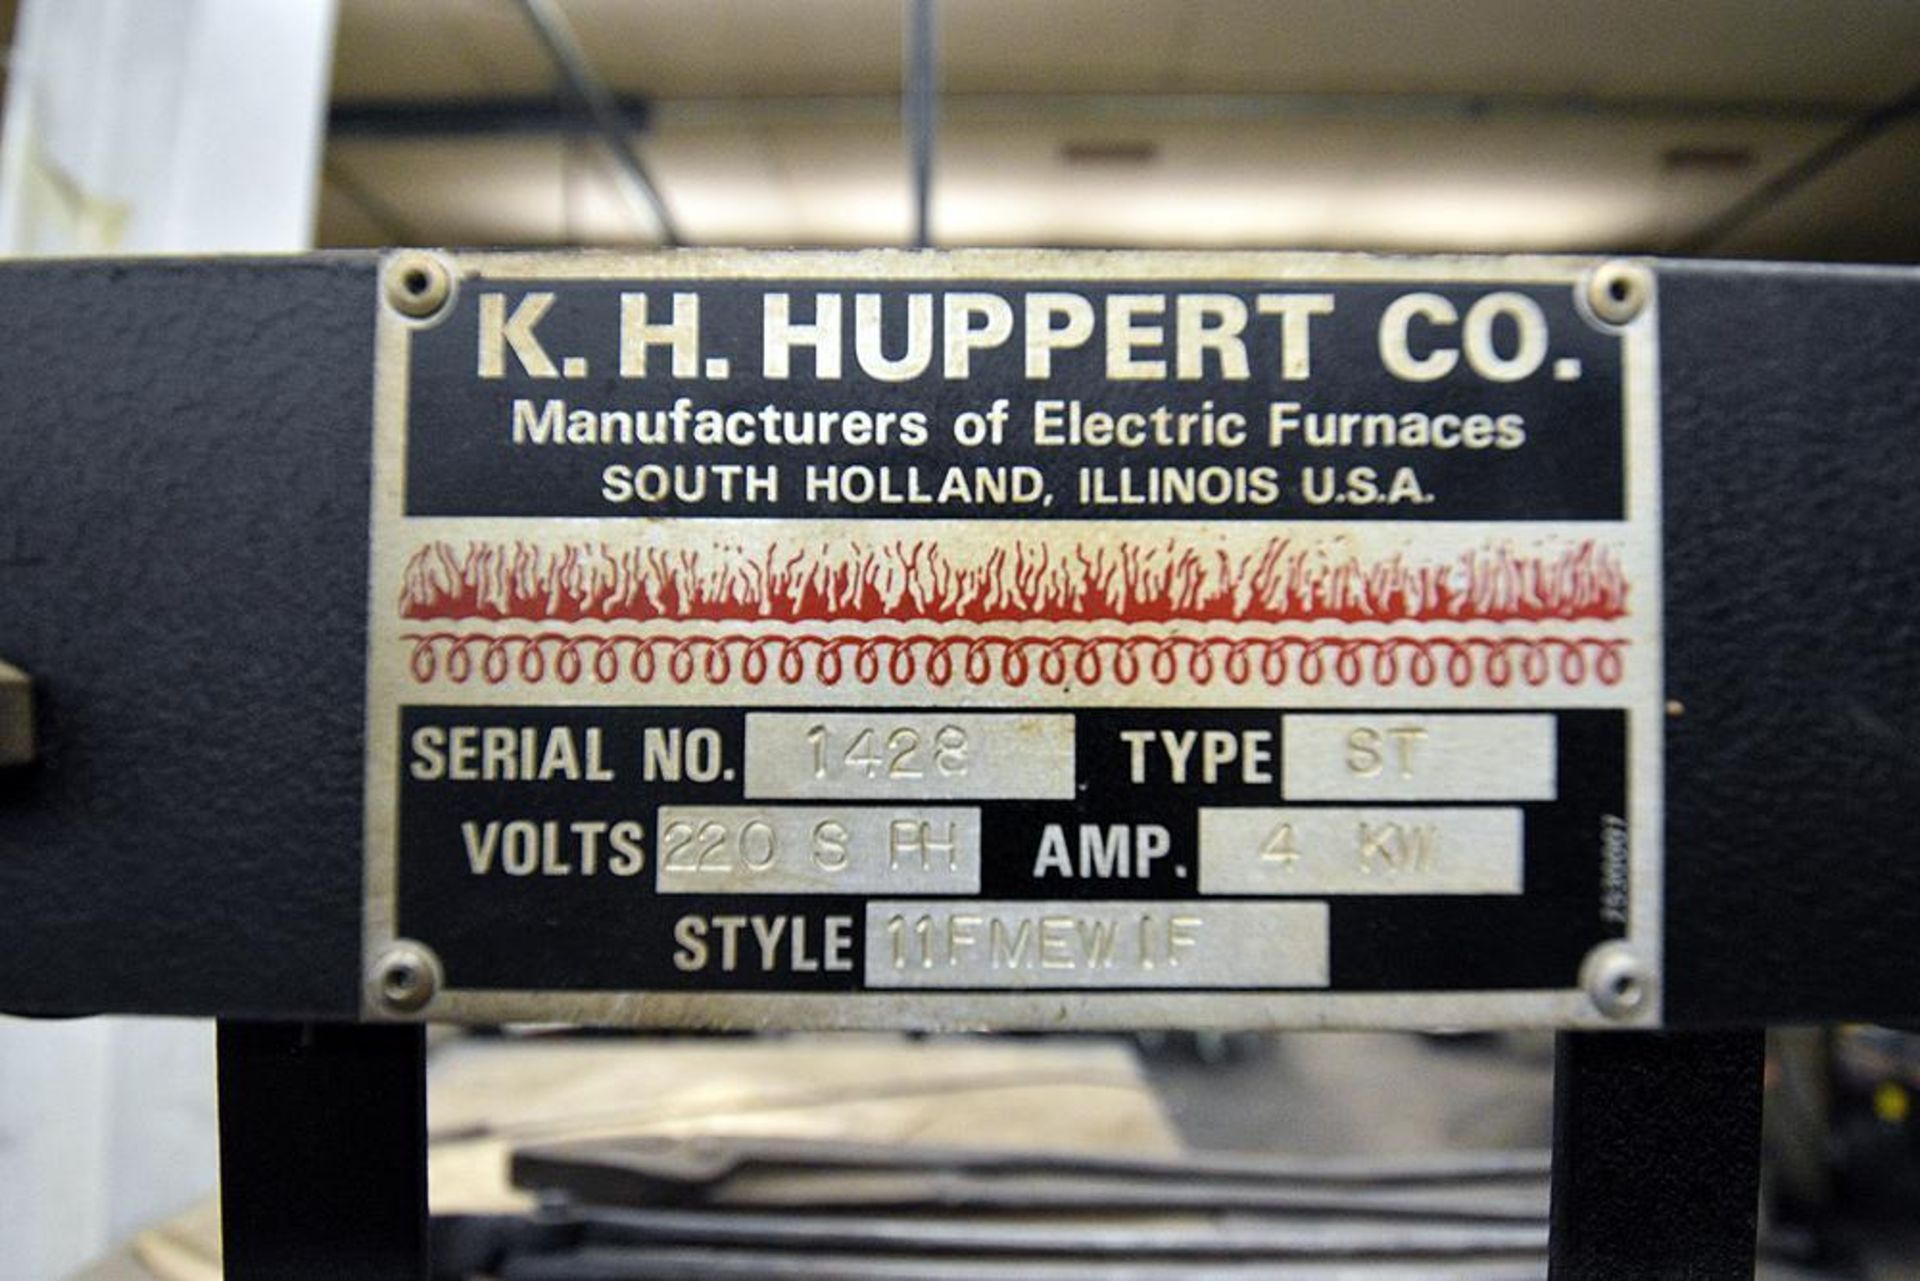 K.H. Huppert Co. mod 11FMEW1F Electric Furnace s/n 1428 - Image 3 of 4